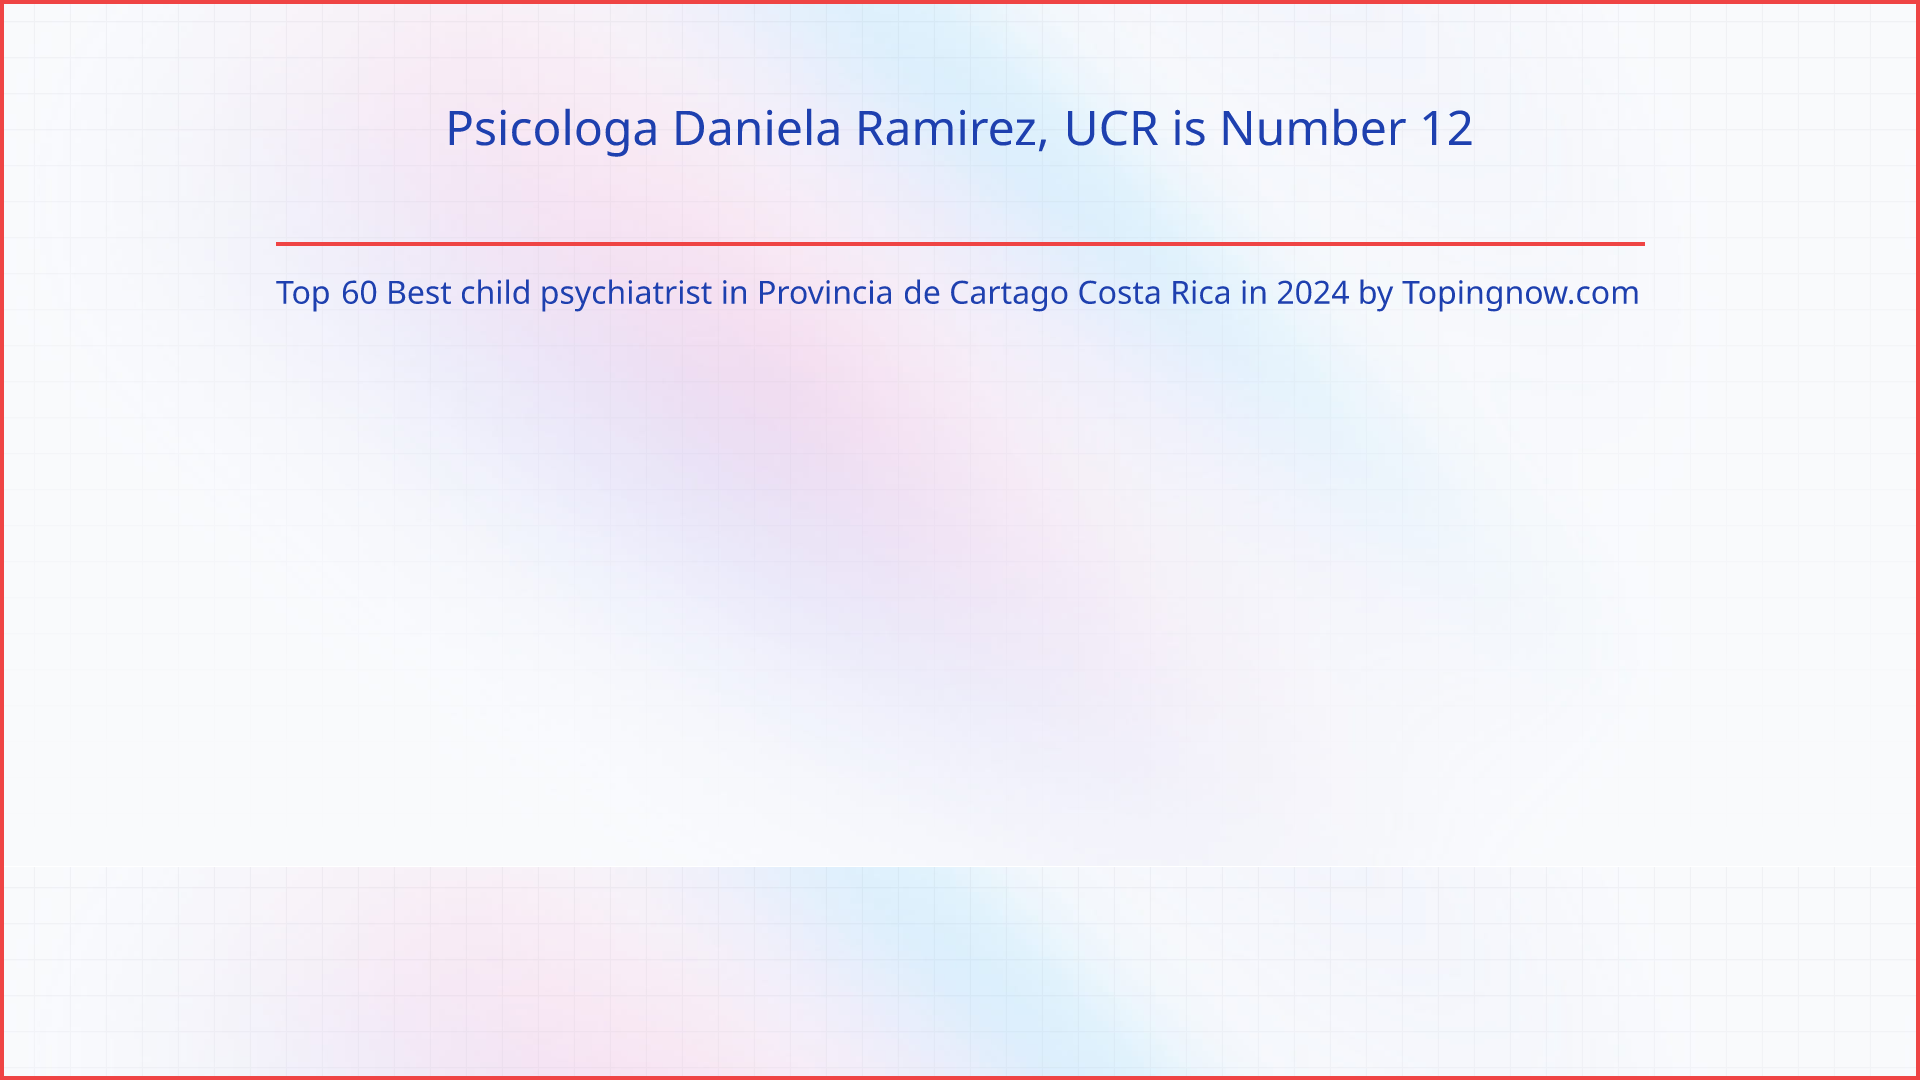 Psicologa Daniela Ramirez, UCR: Top 60 Best child psychiatrist in Provincia de Cartago Costa Rica in 2024